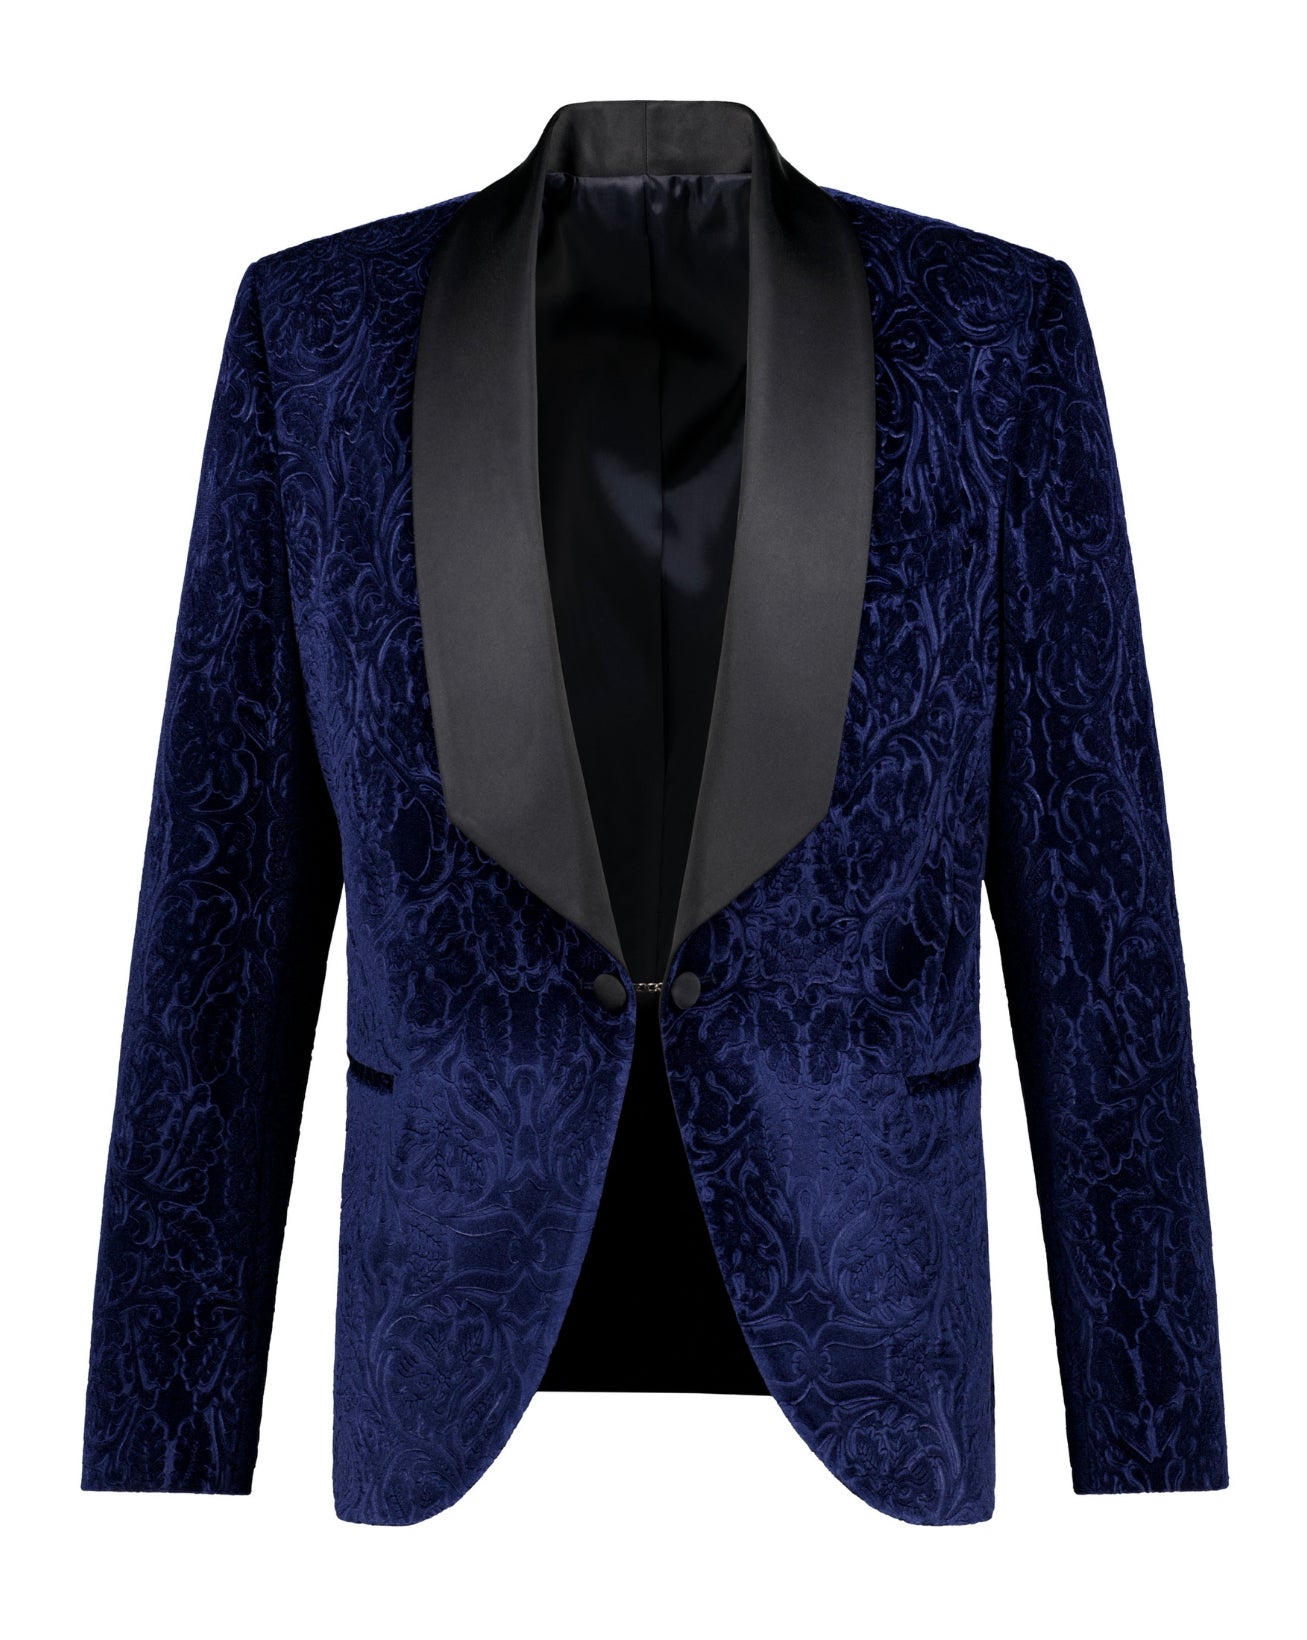 The Mavi Velvet Ceremony Suit - Suit by Urbbana